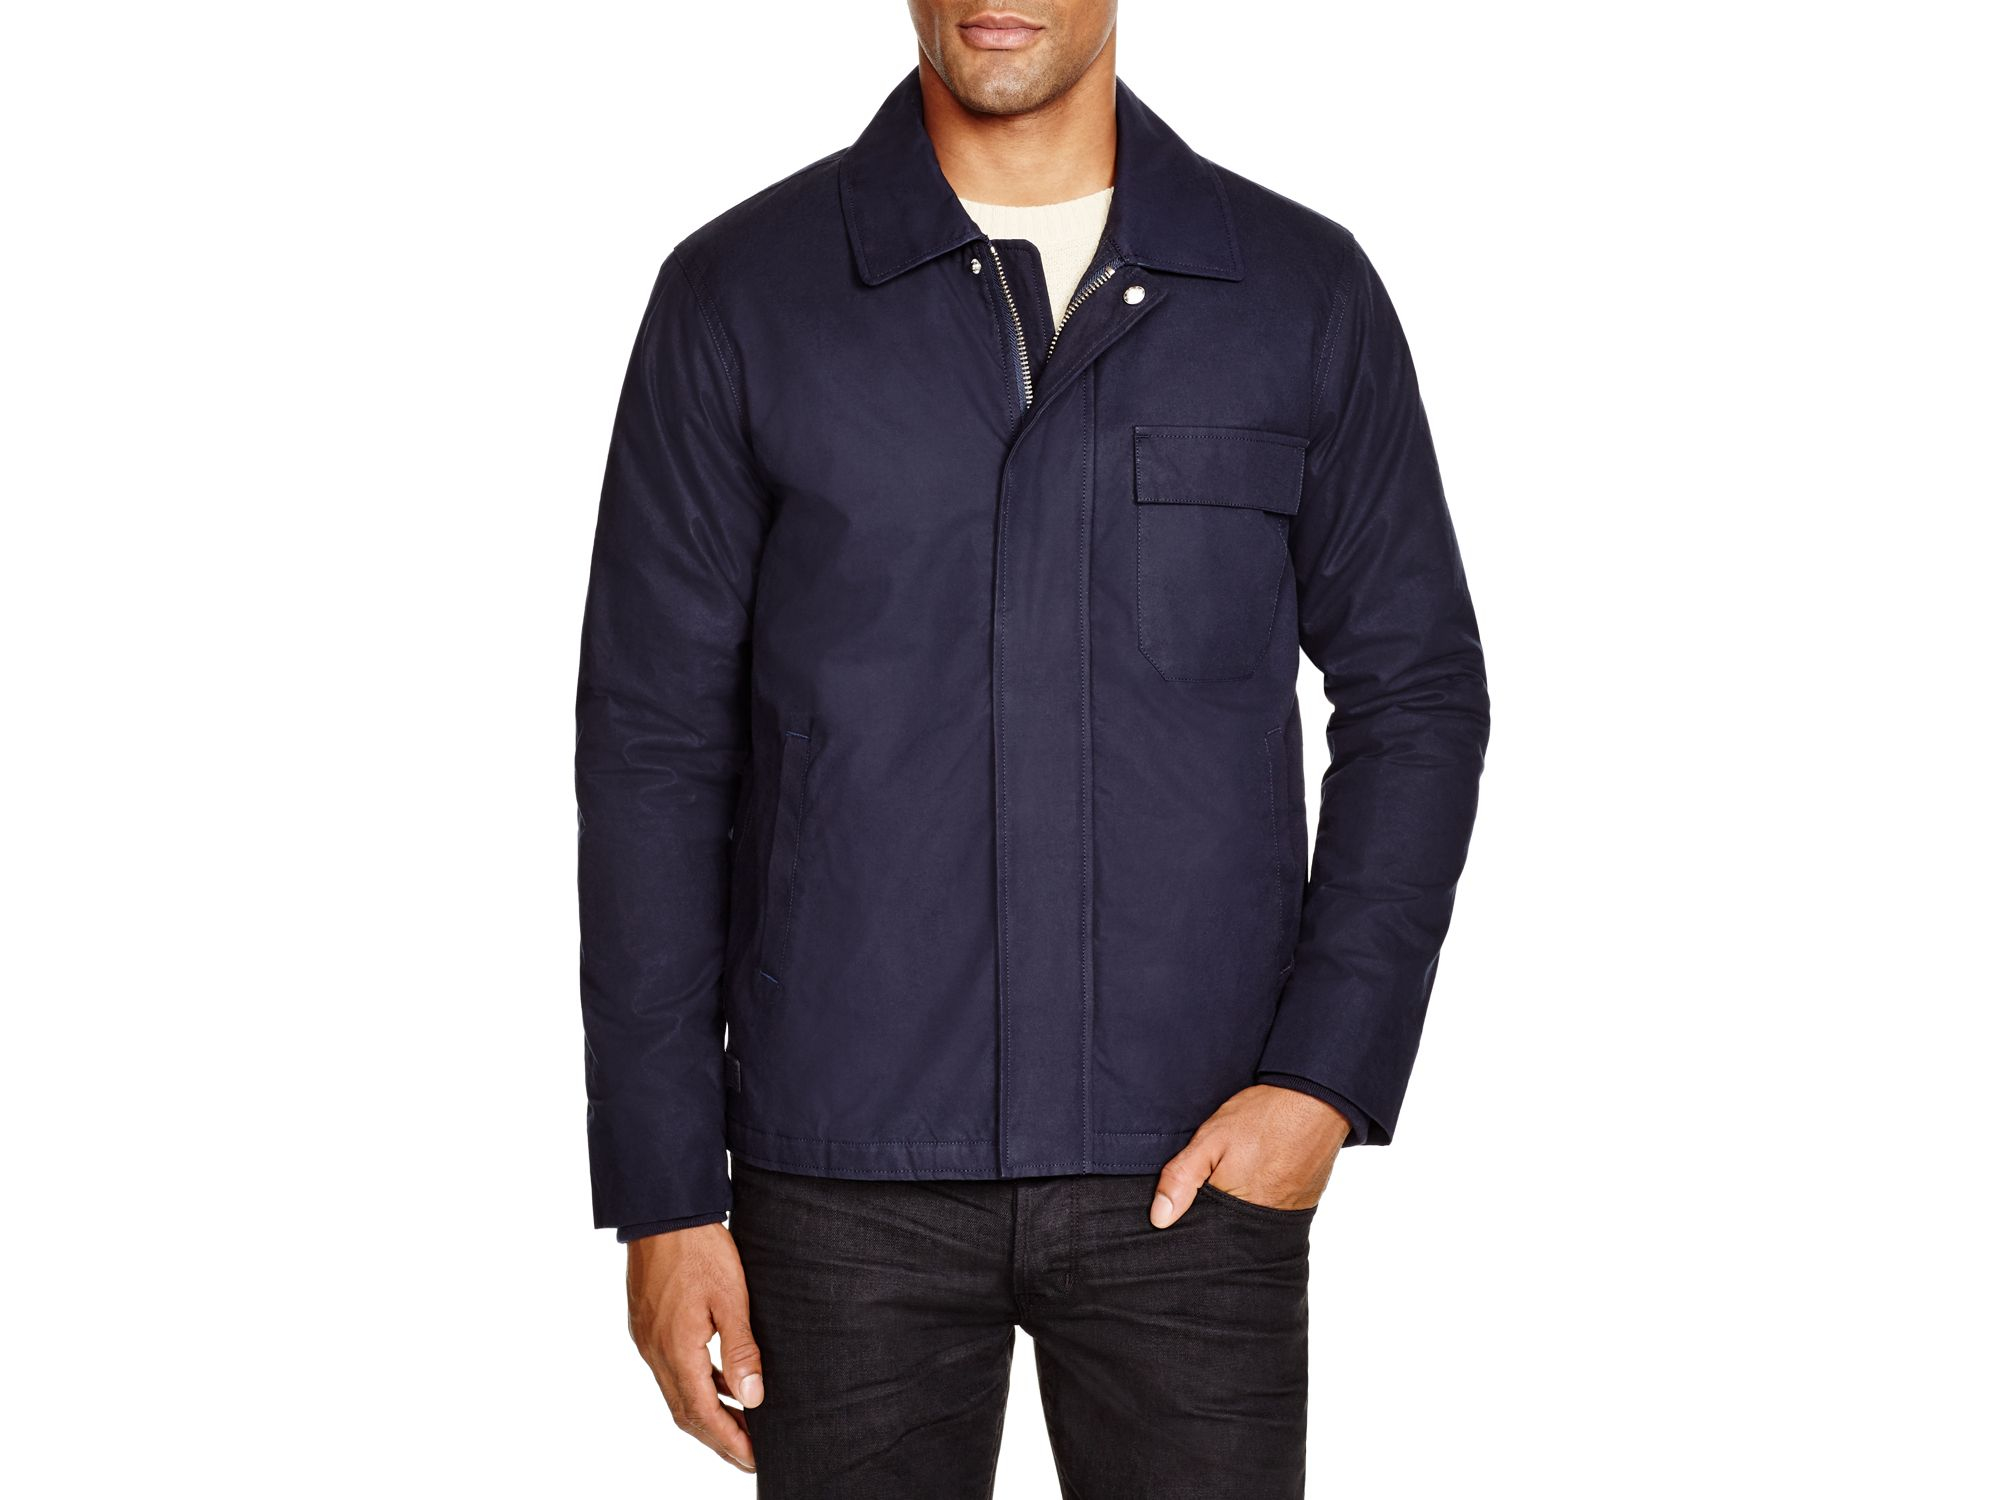 GANT Synthetic Deck Jacket in Navy (Blue) for Men - Lyst